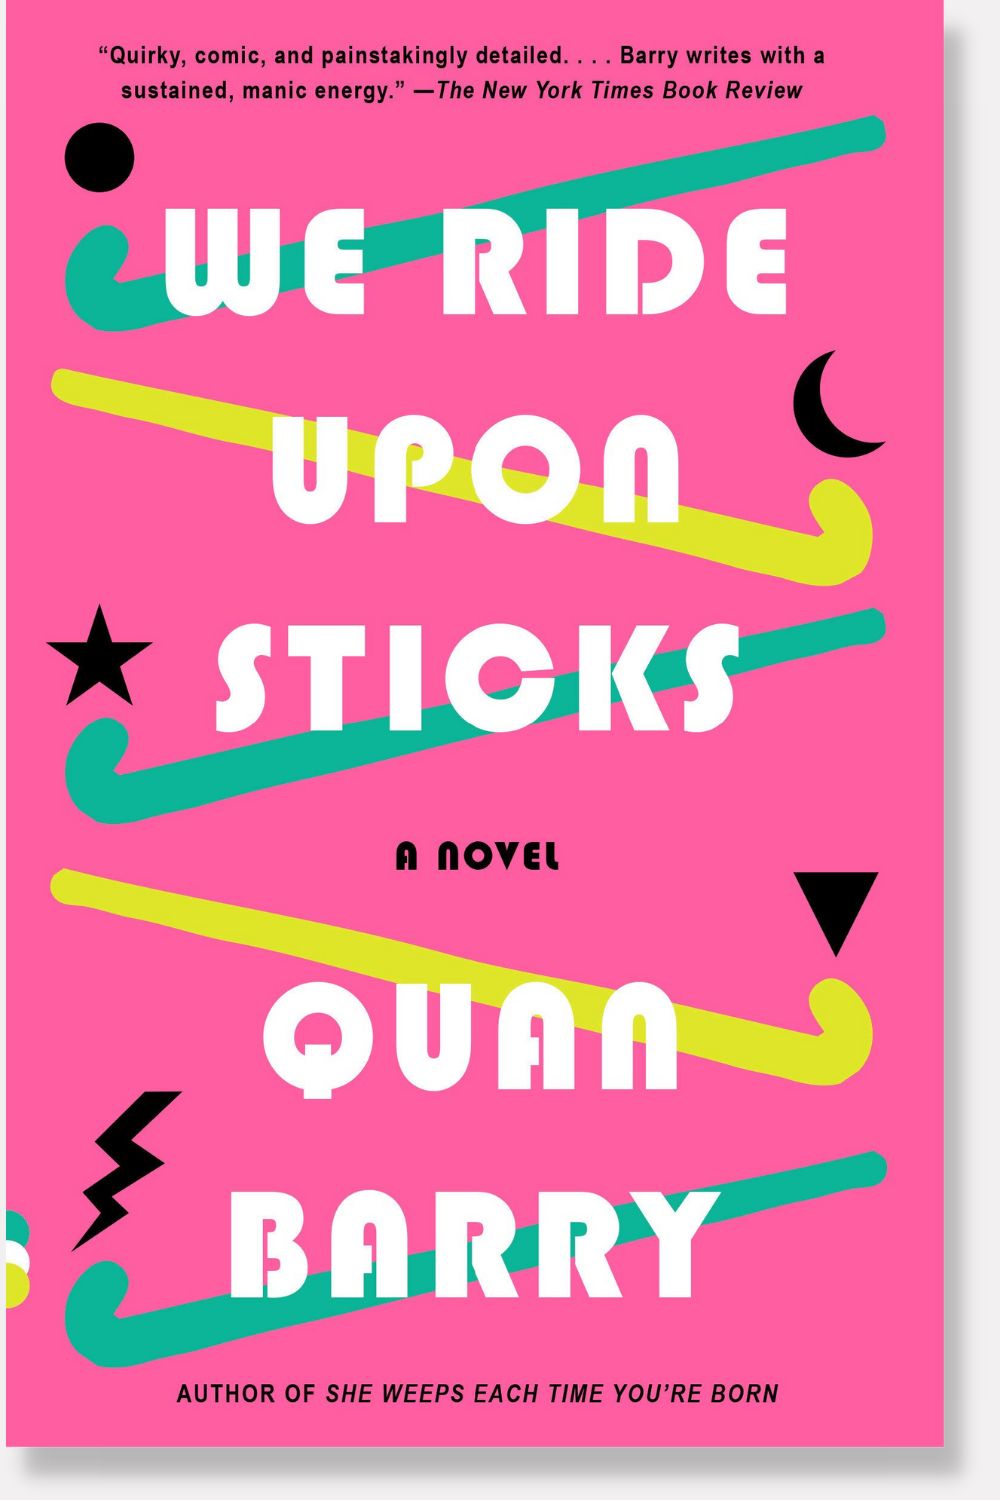 We Ride Upon Sticks by Quan Berry - book cover